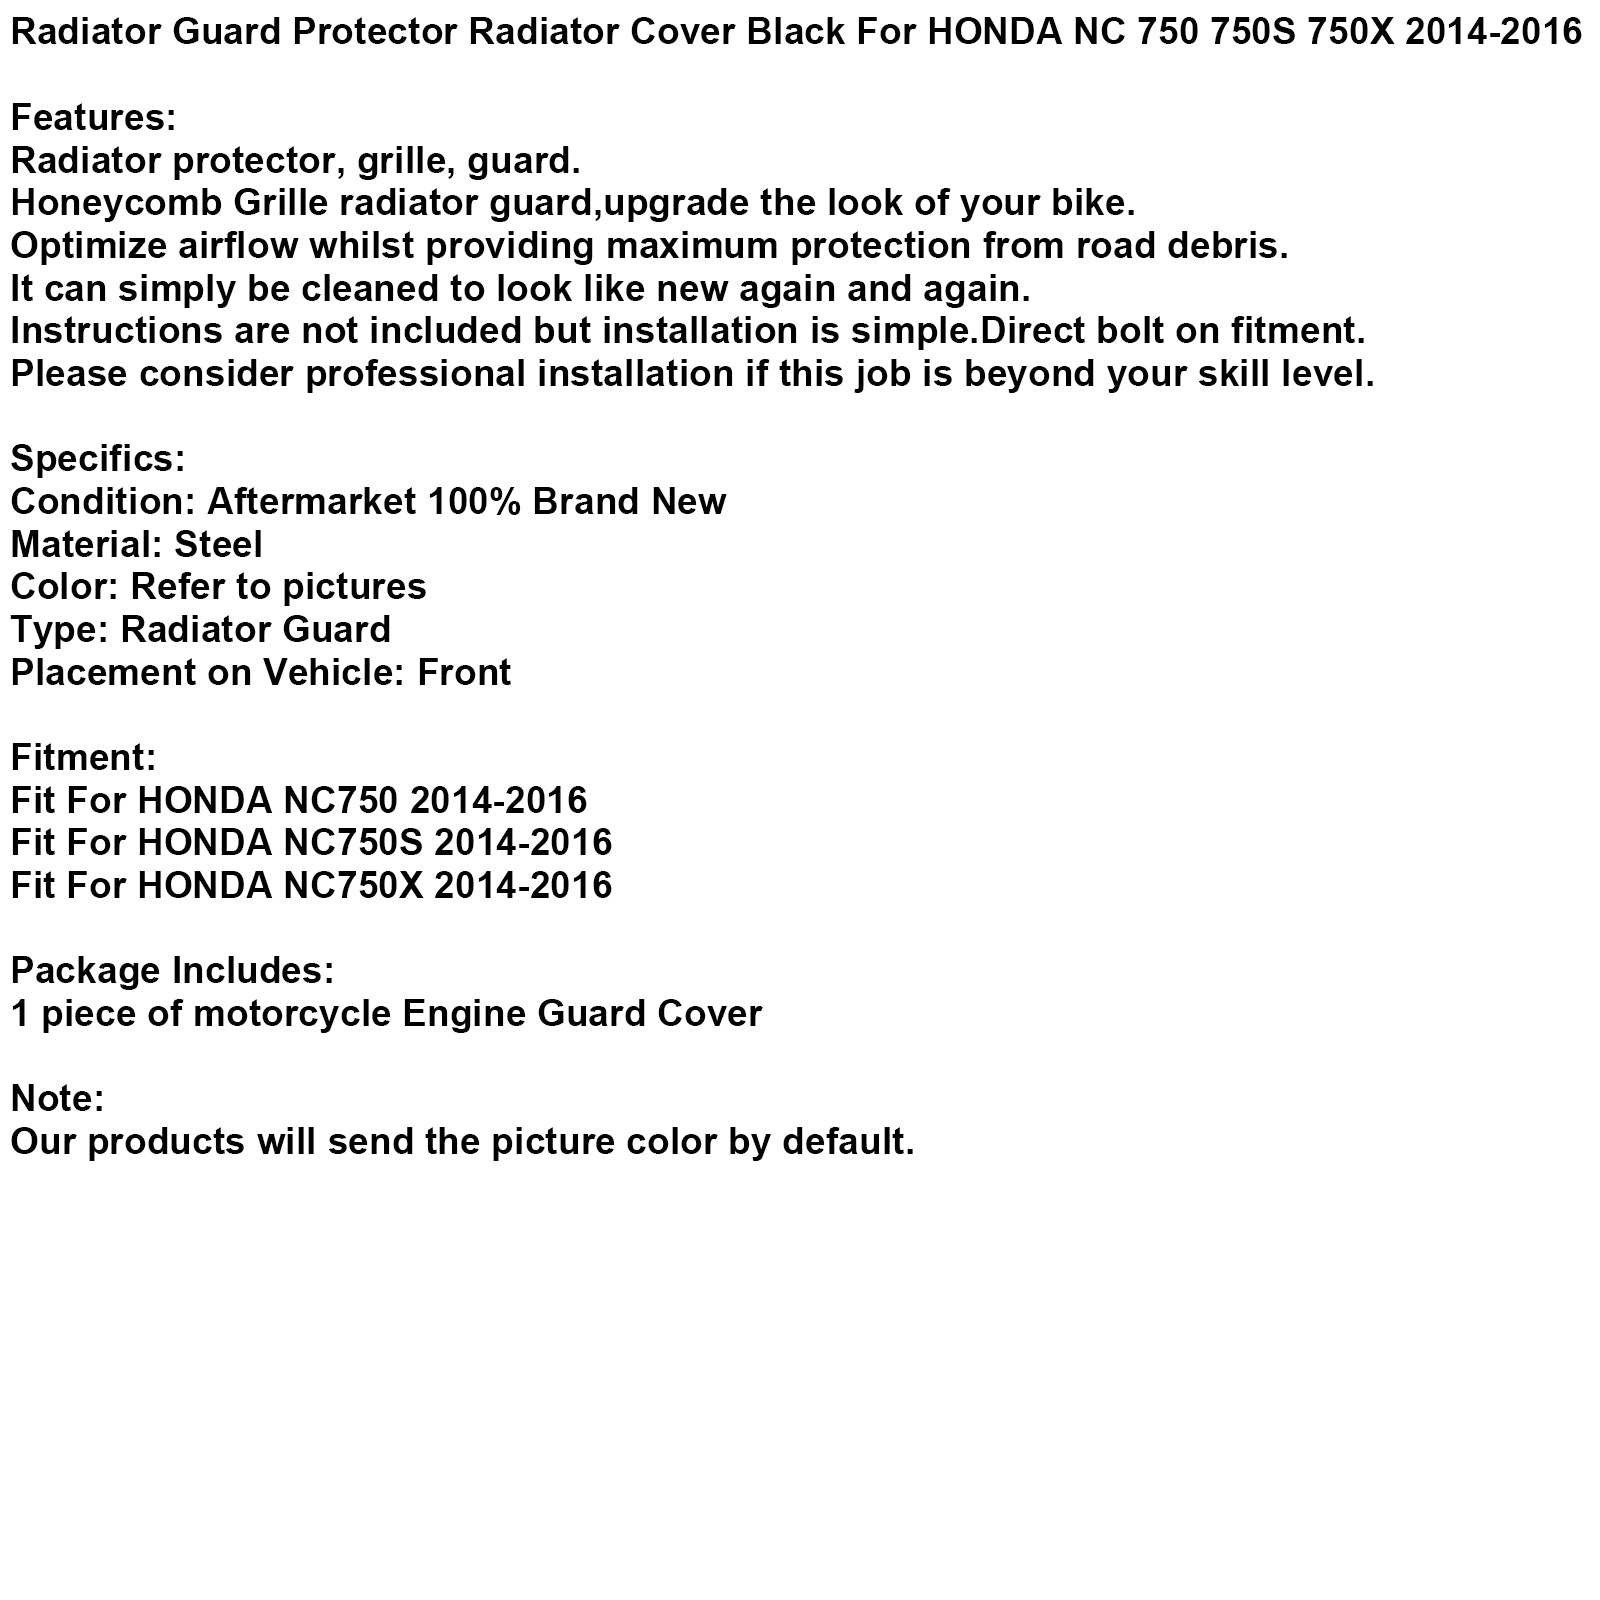 Radiator Guard Cover Radiator Protector Black For Honda Nc 750 750S 750X 14-16